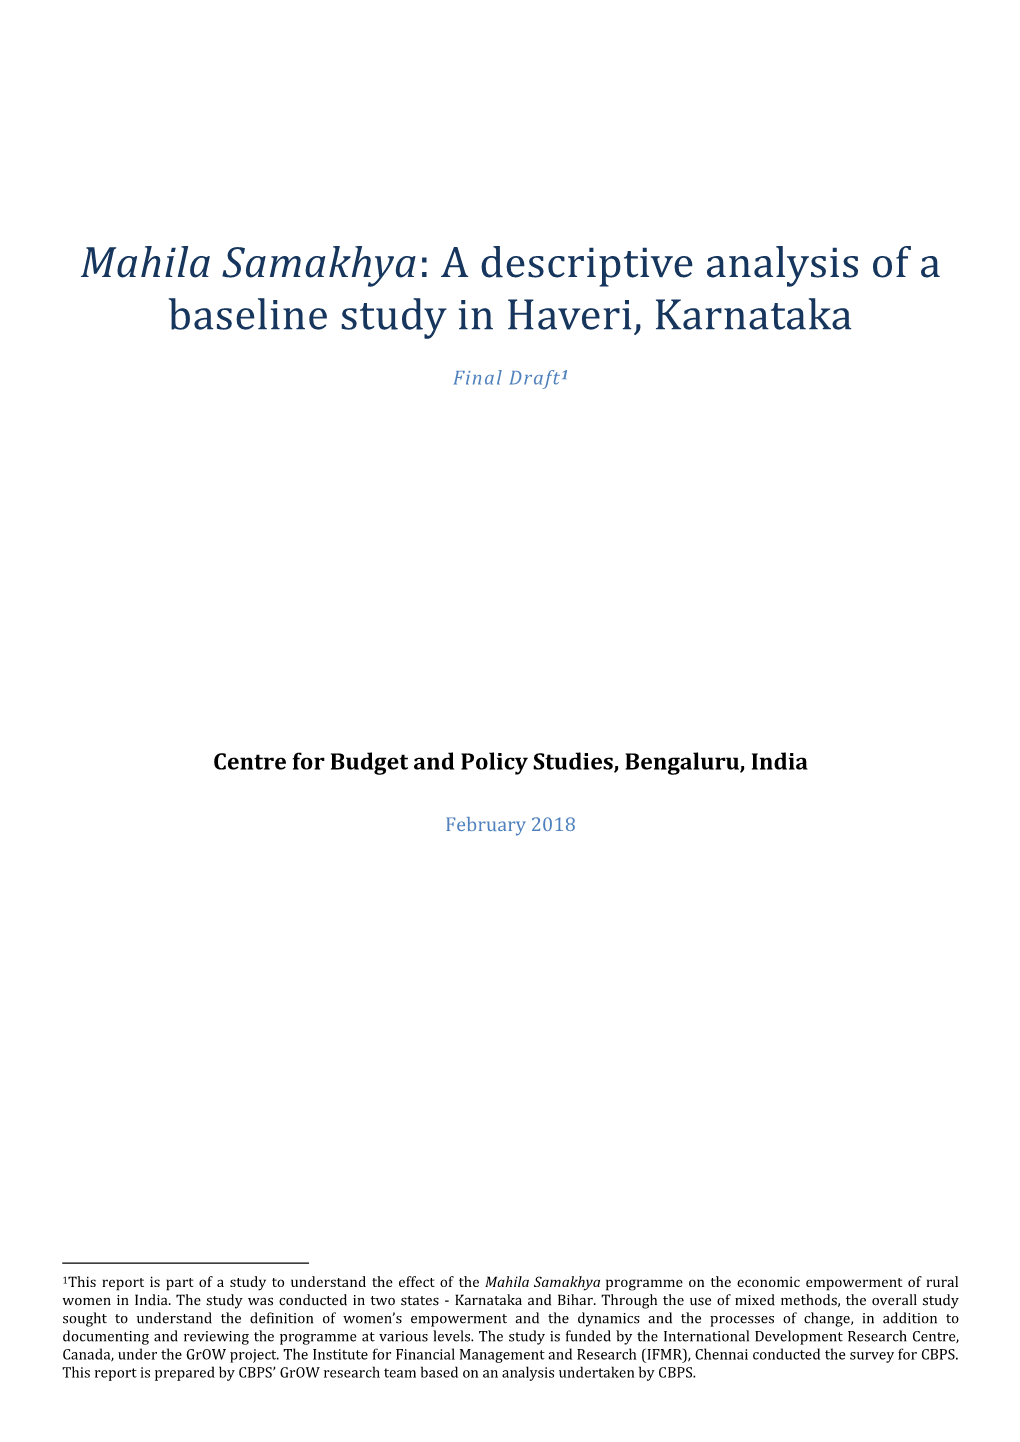 A Descriptive Analysis of Baseline Study in Haveri, Karnataka